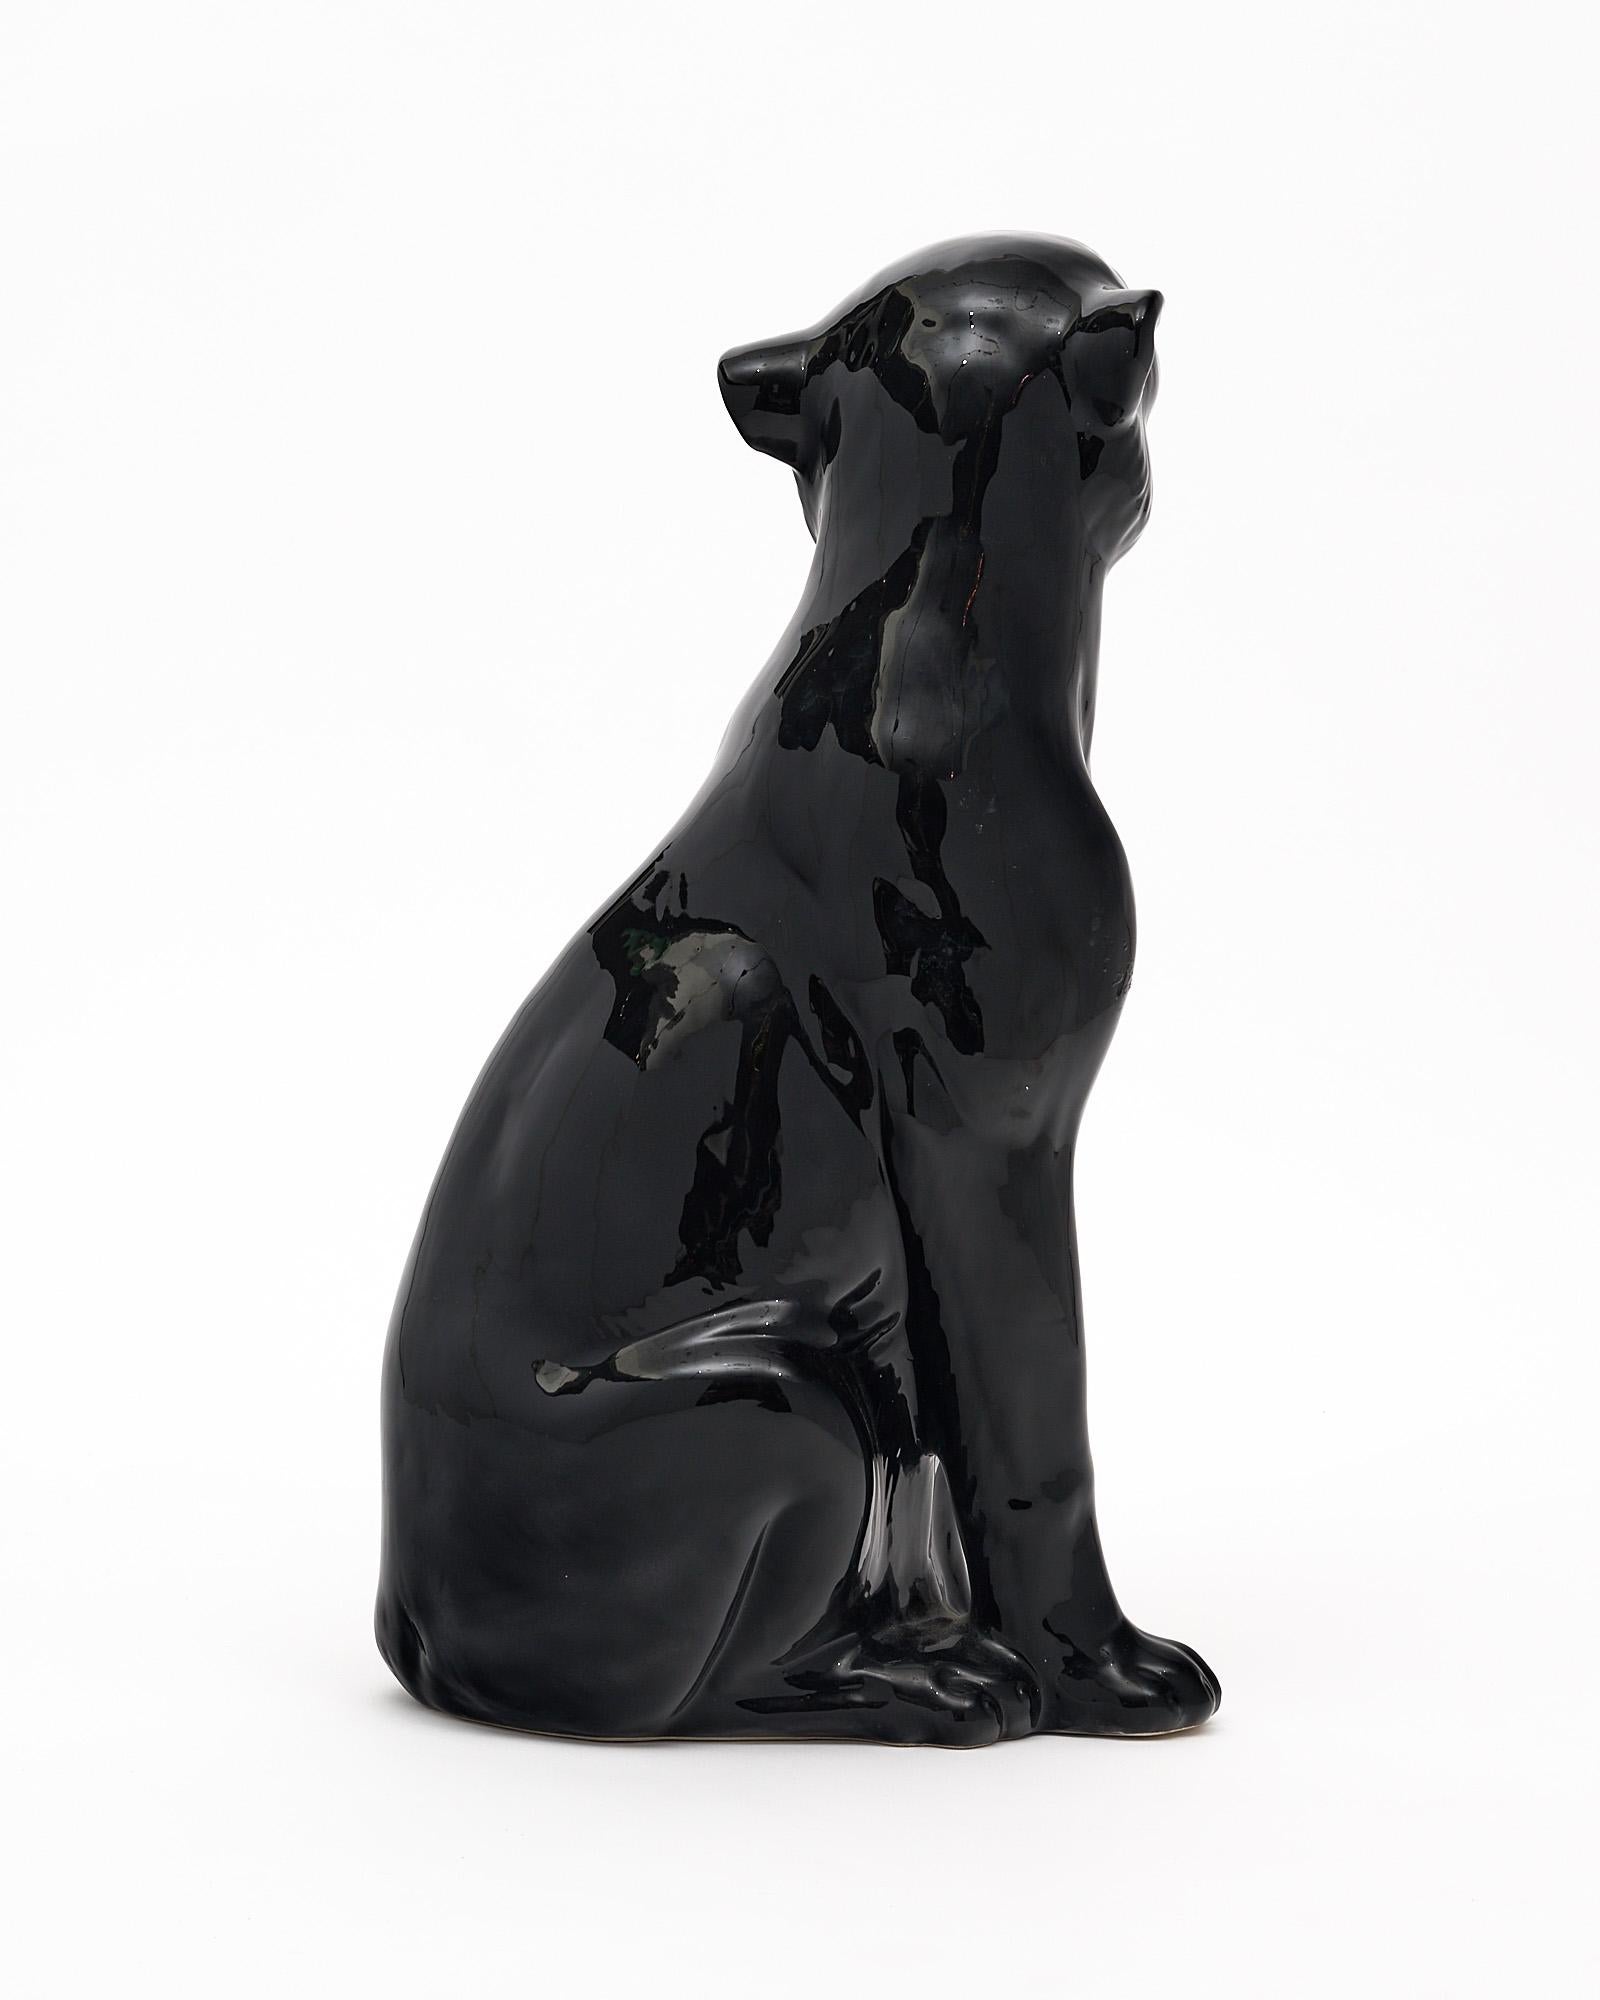 Vintage Panther Sculpture 2